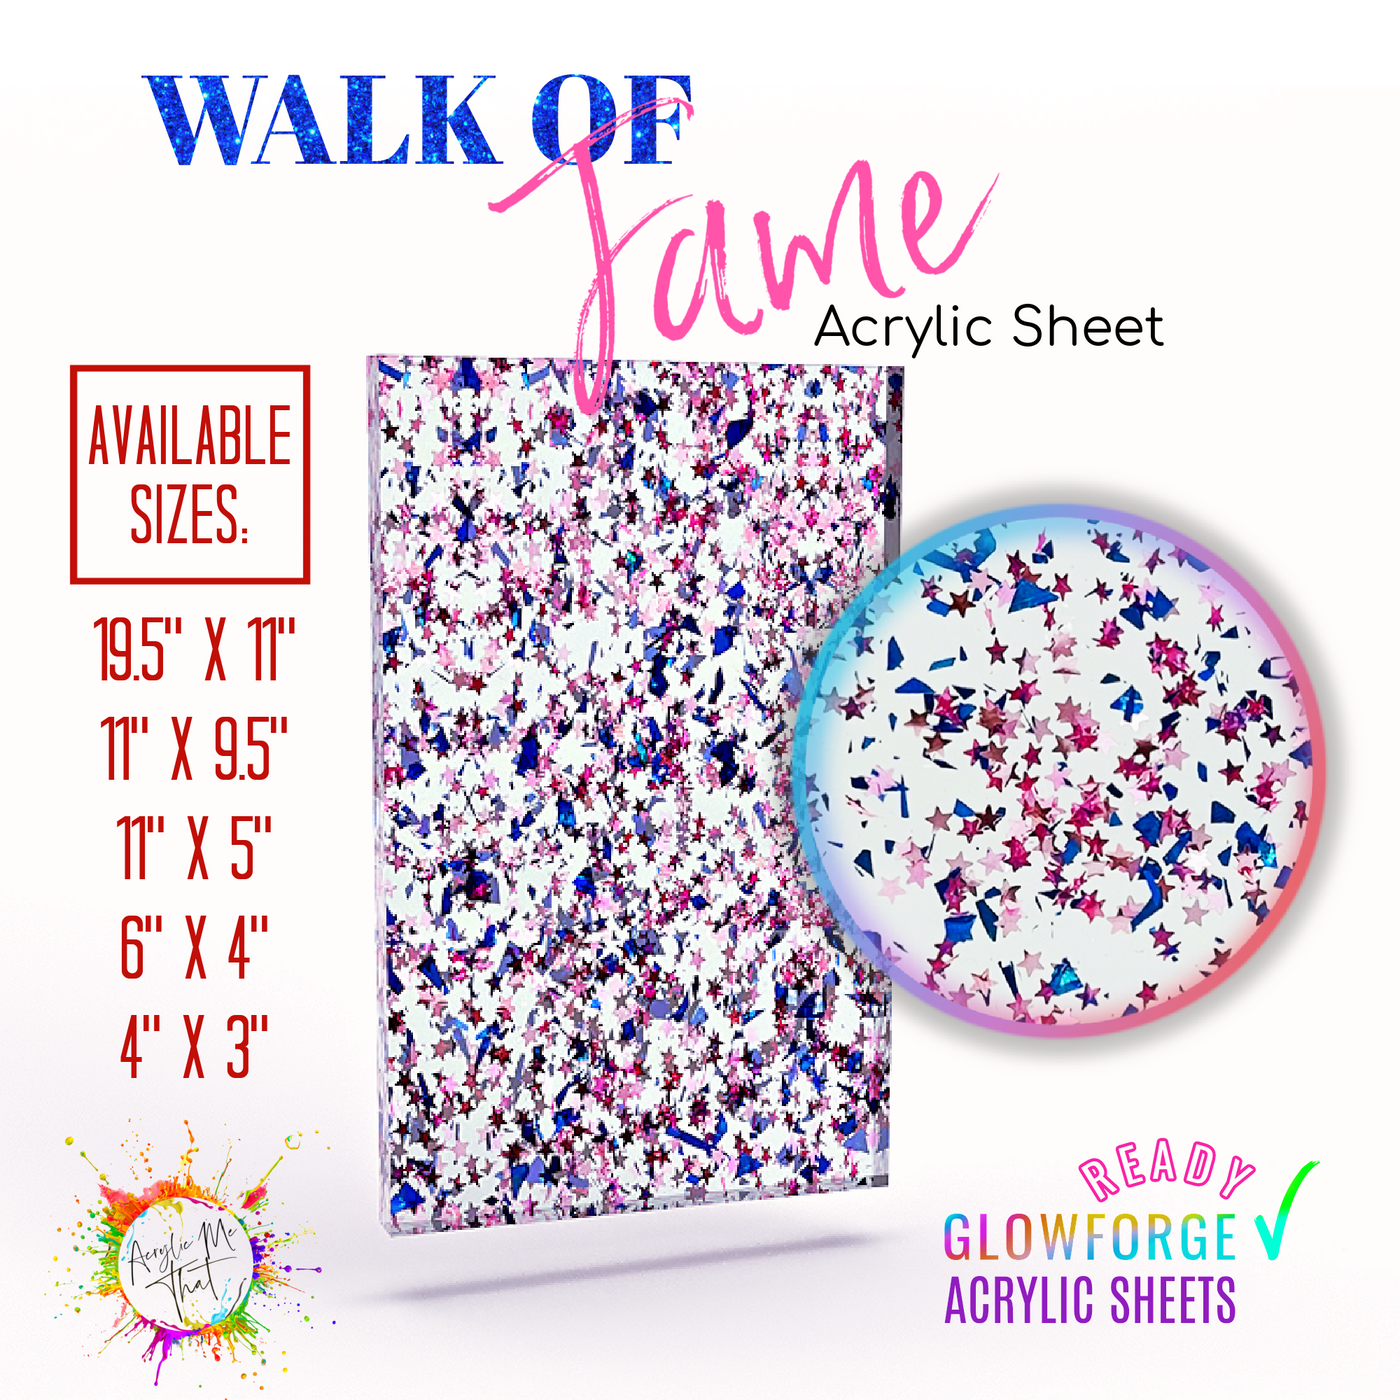 Winter Funderland Pink Tinted Translucent Confetti Chunky Glitter Acrylic  Sheet